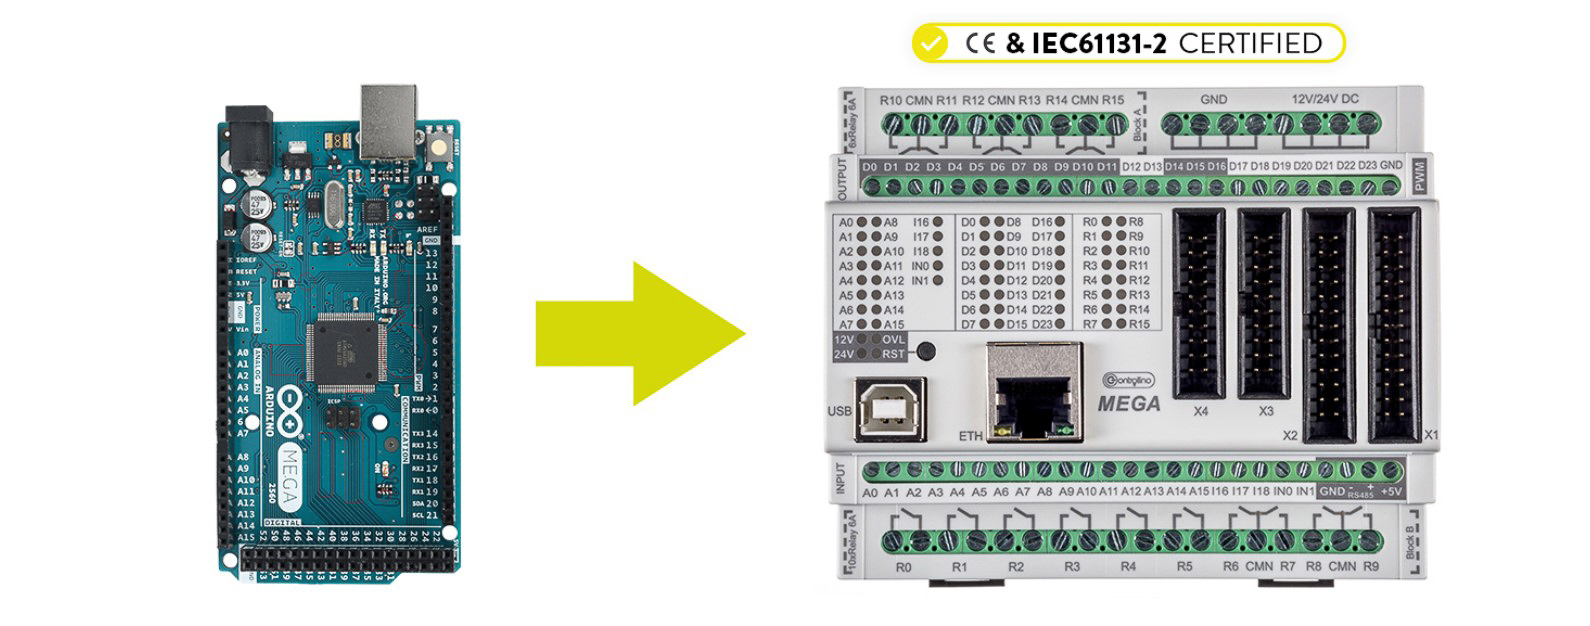 Controllino certified CE industrial PLC